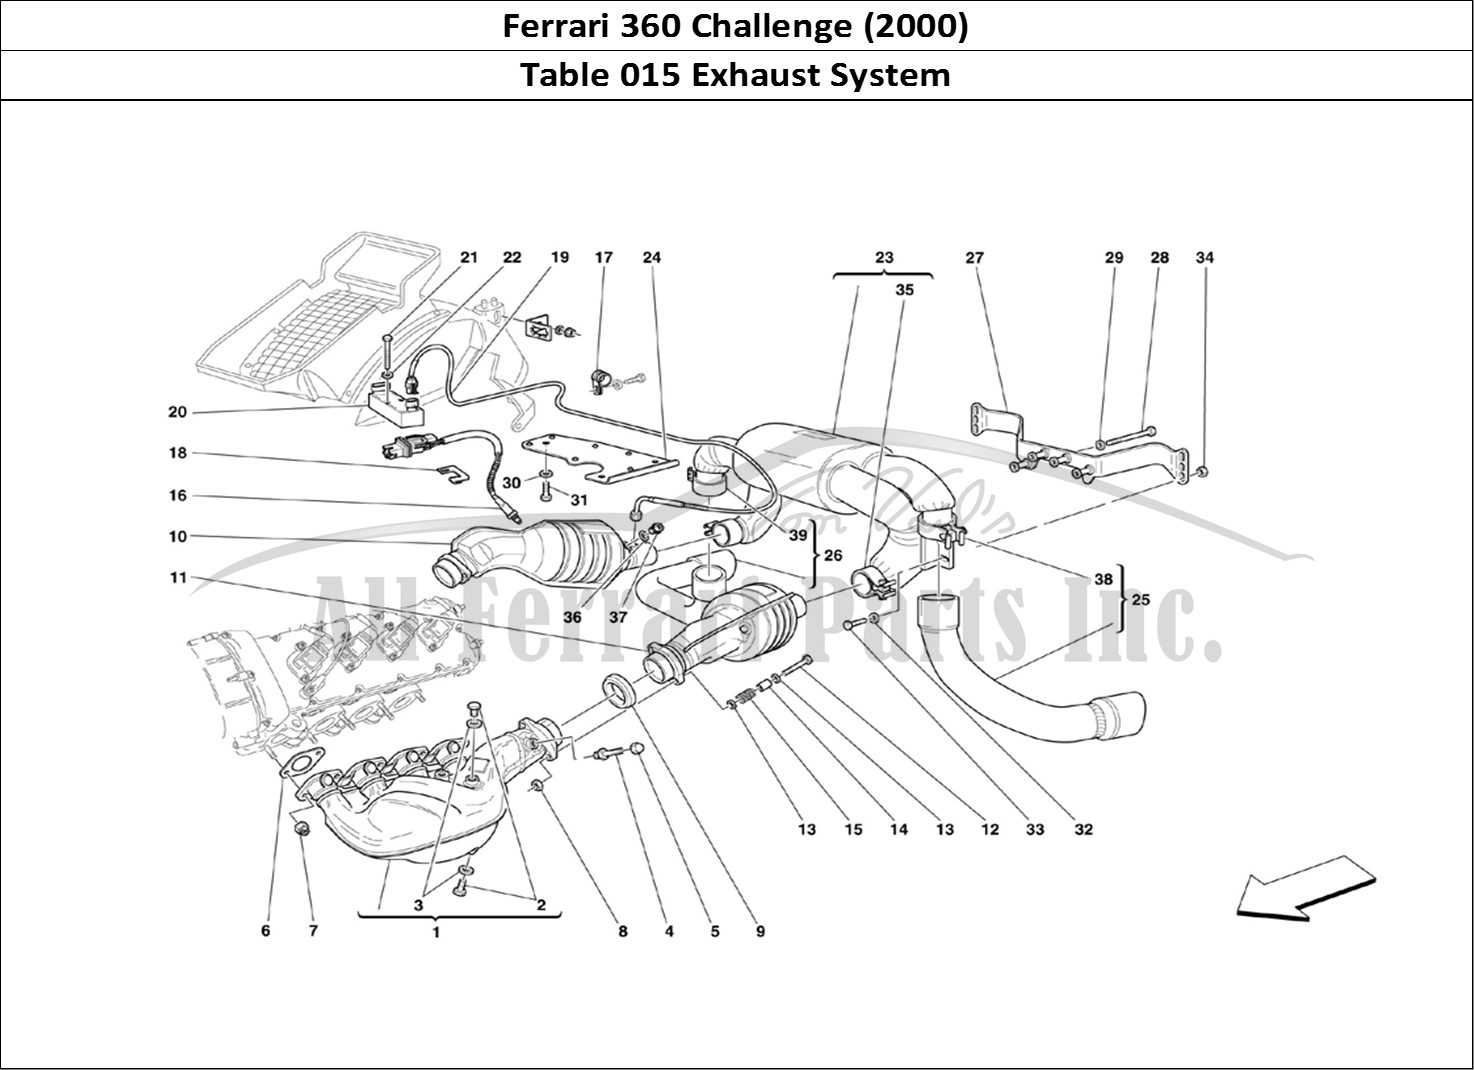 Ferrari Parts Ferrari 360 Challenge (2000) Page 015 Exhaust System